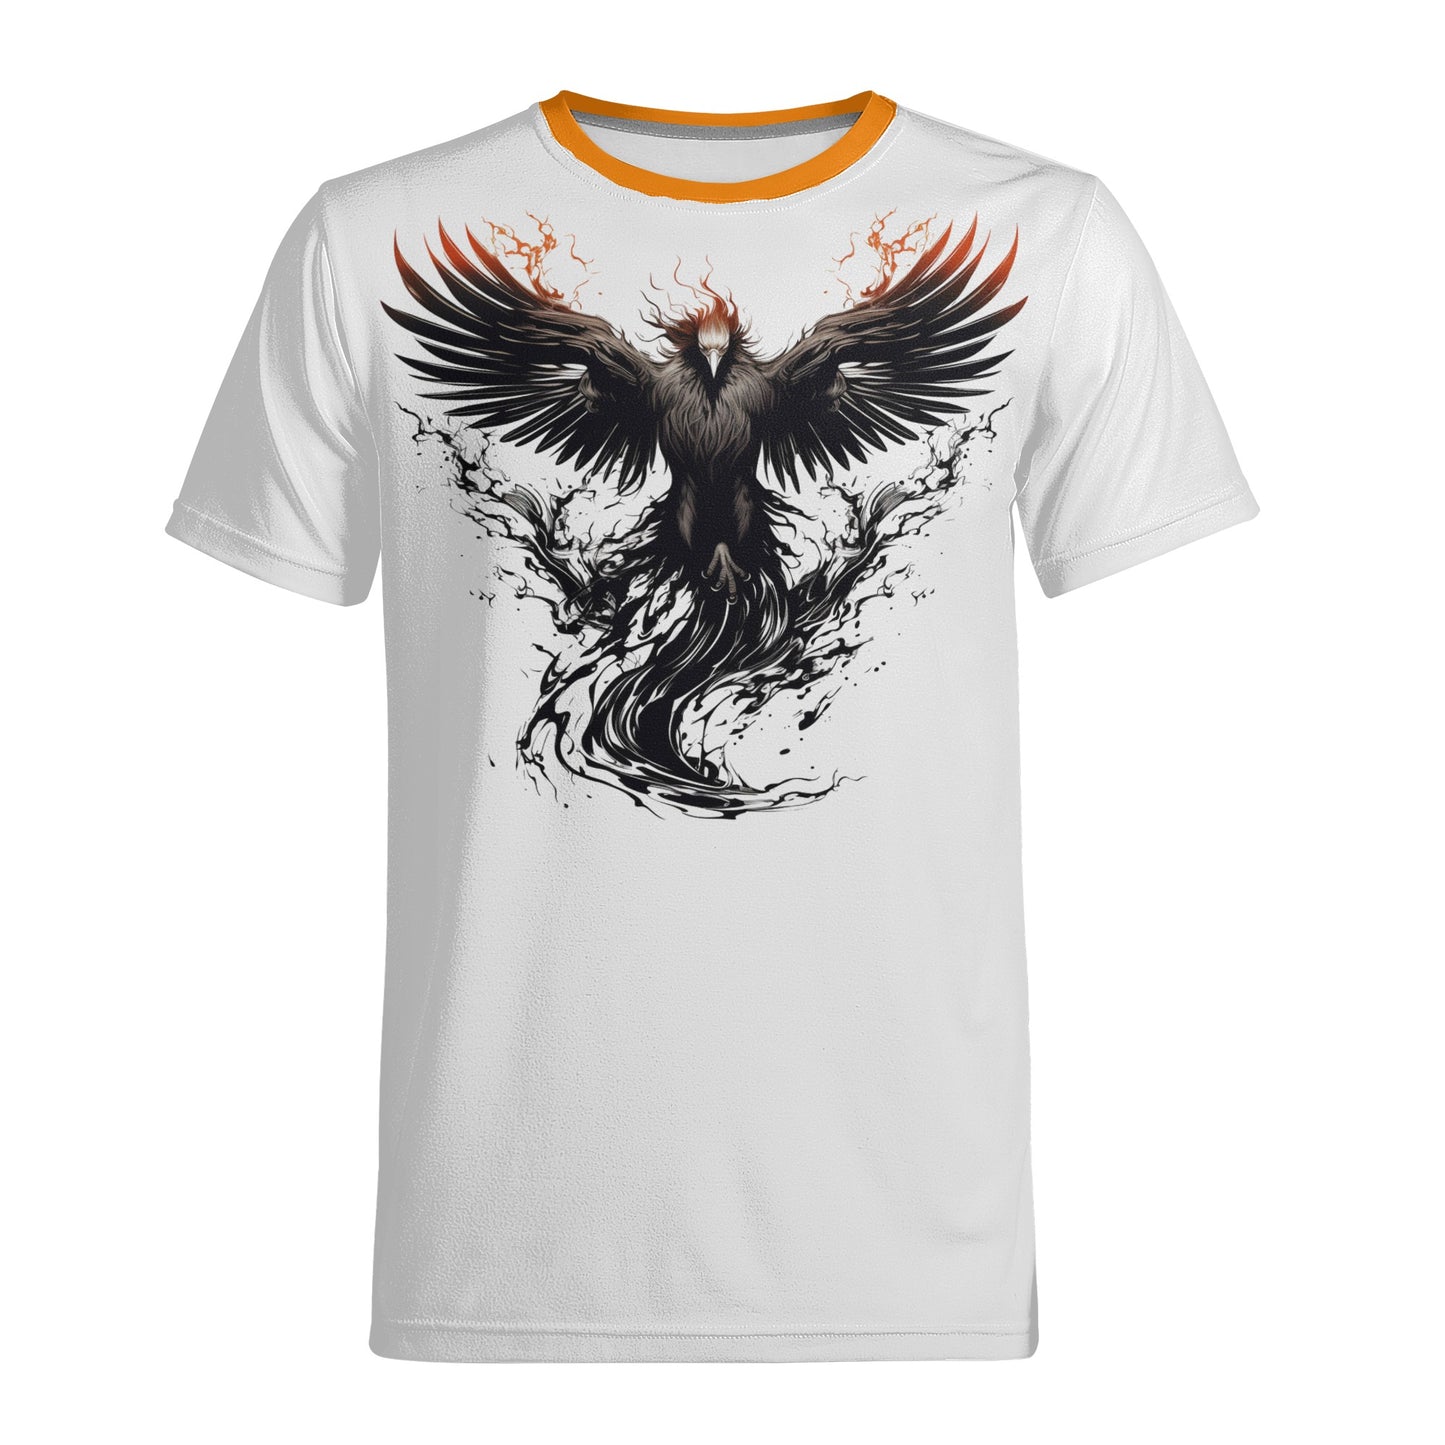 Neduz Mens Dark Lore Phoenix T-Shirt: Rise From the Ashes